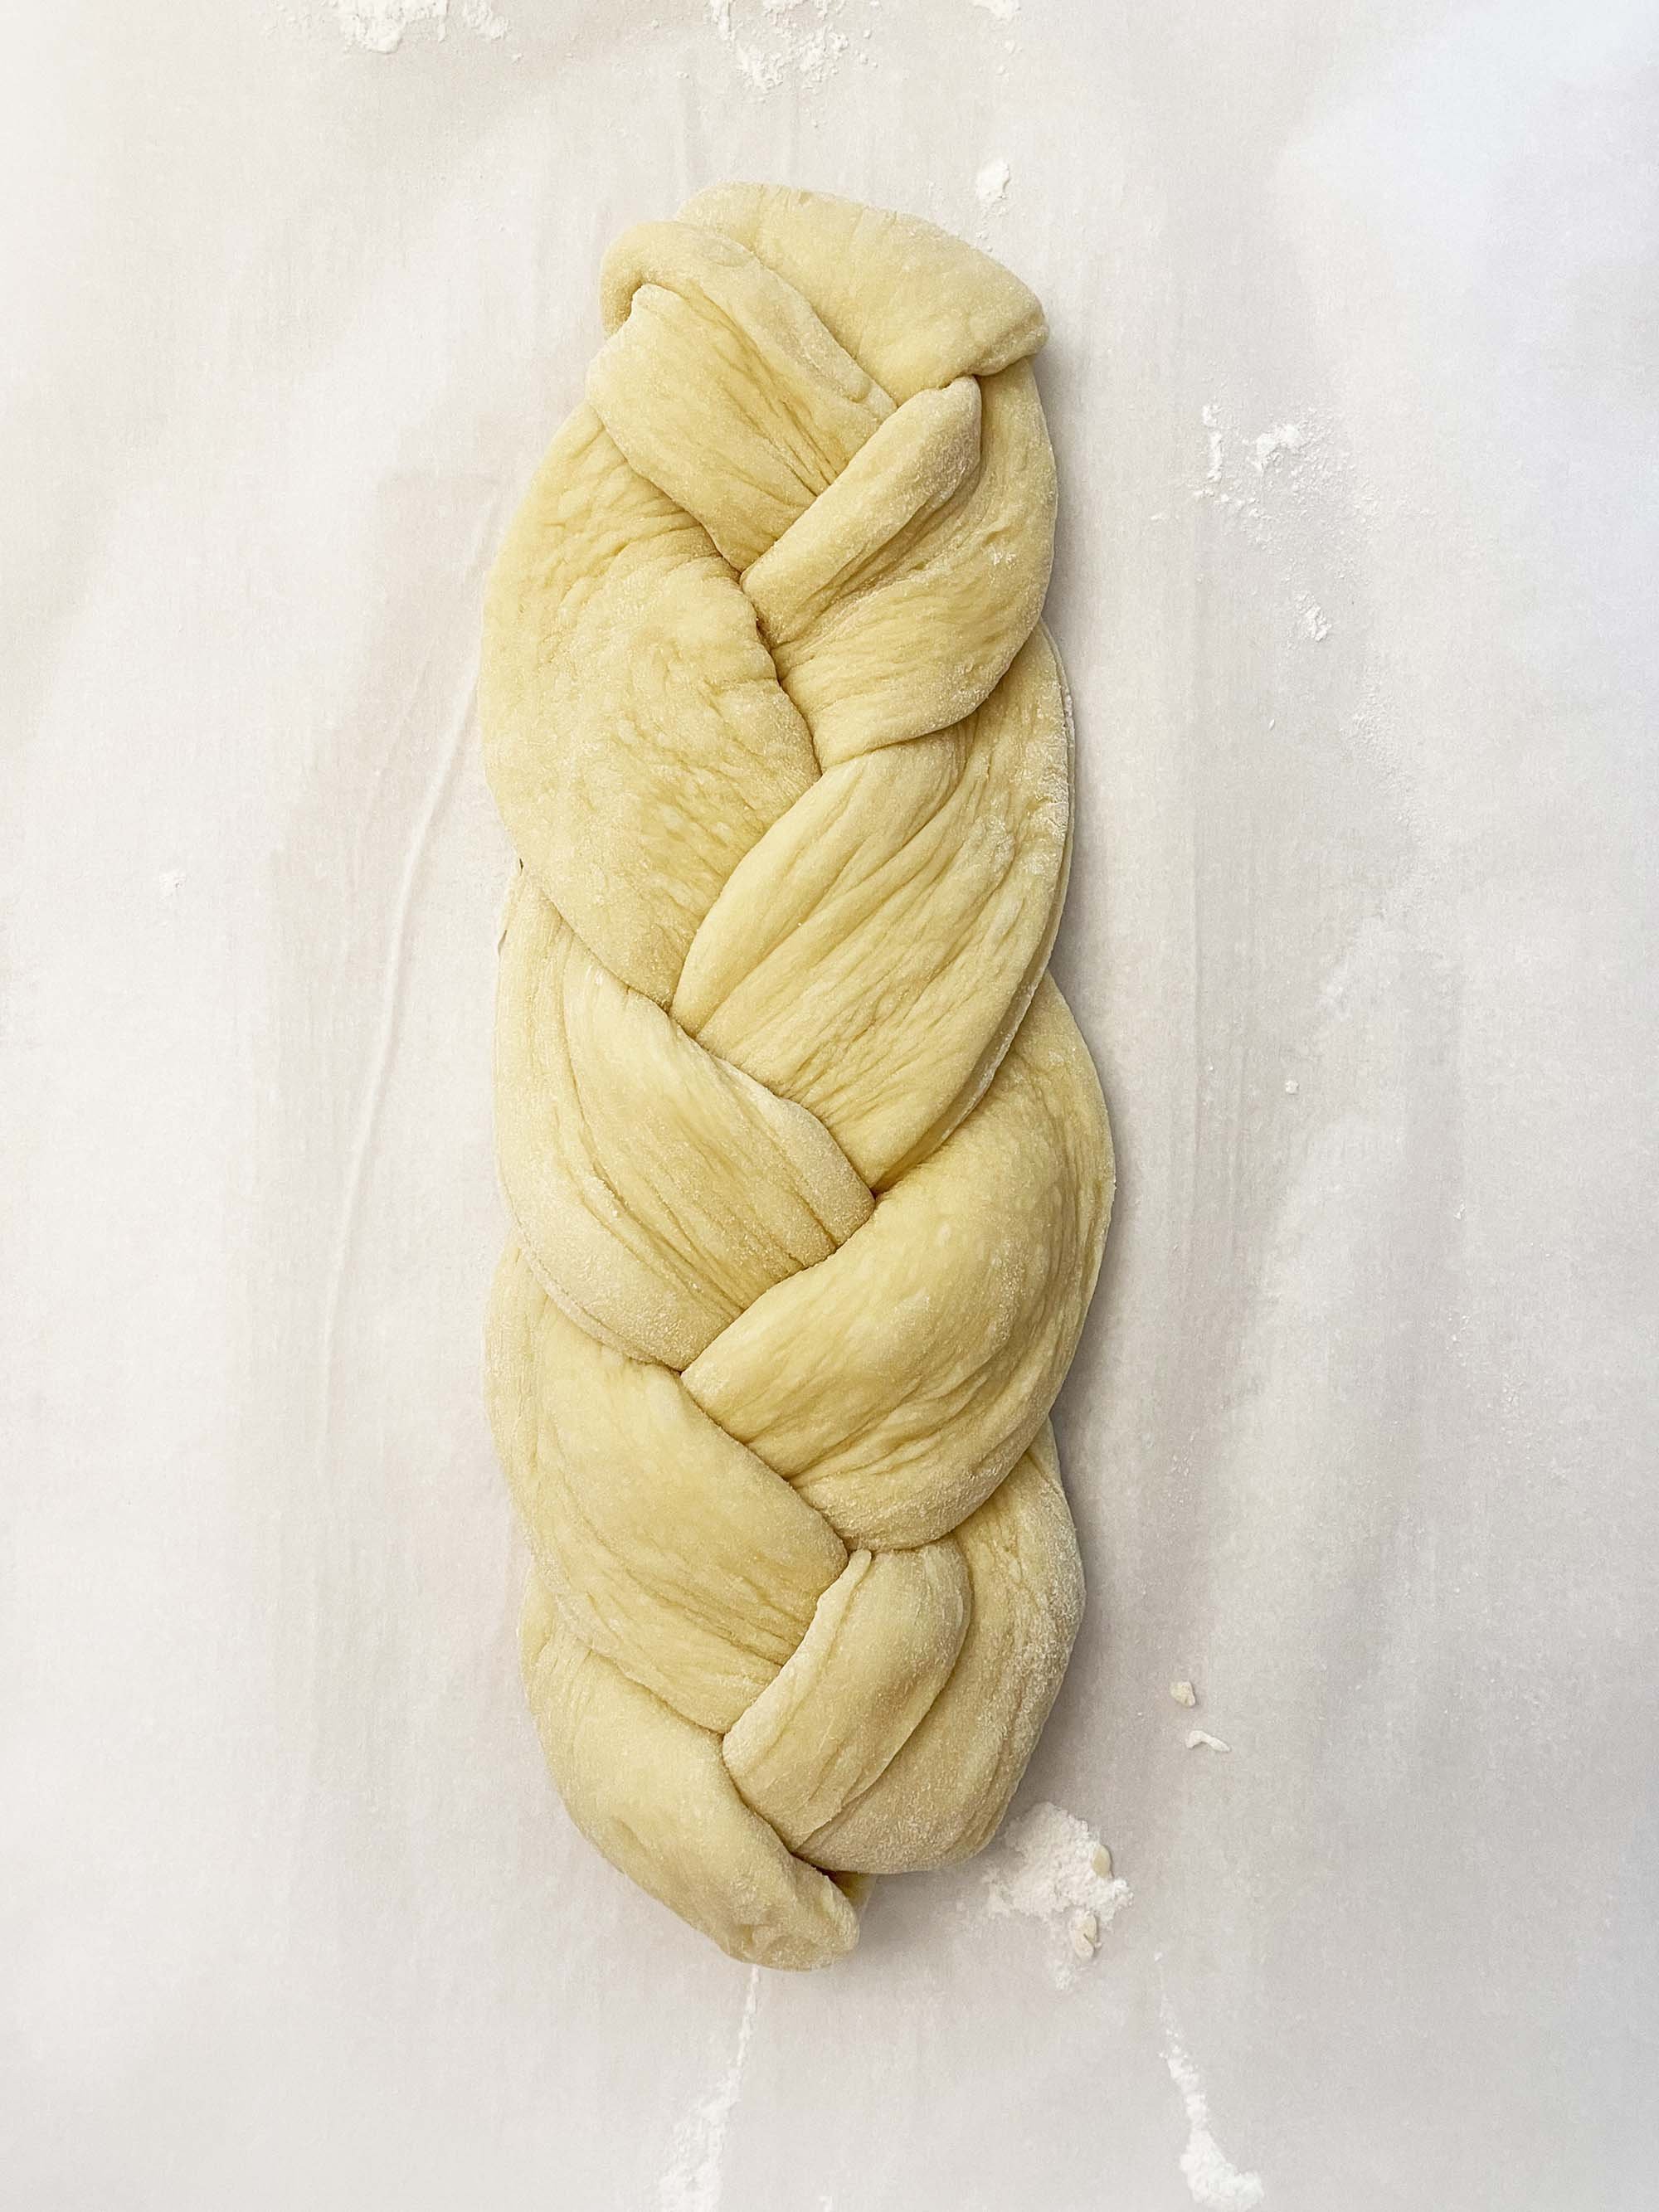 bread-machine-challah6.jpg